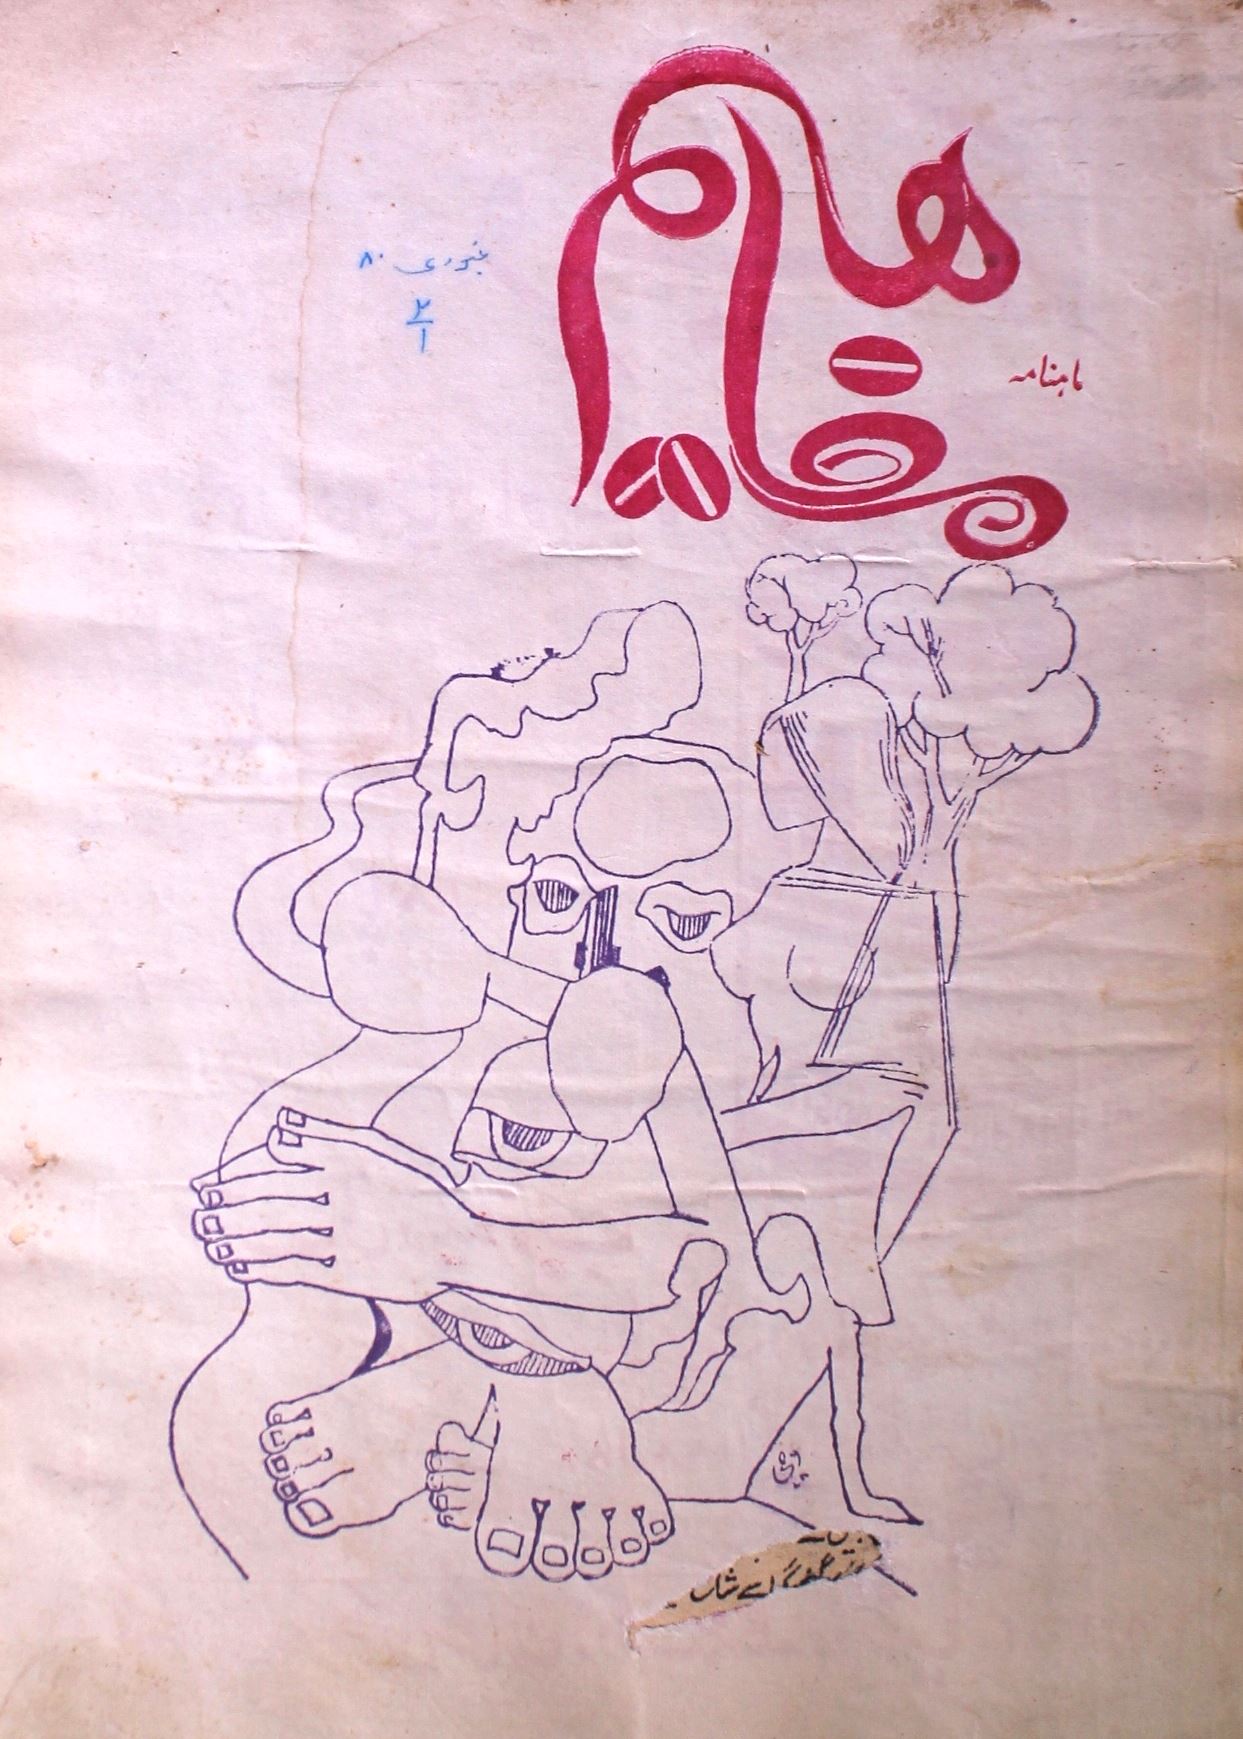 Mafaaheem Jild.2 No.-2 Jan 1980-SVK-Shumara Number-002